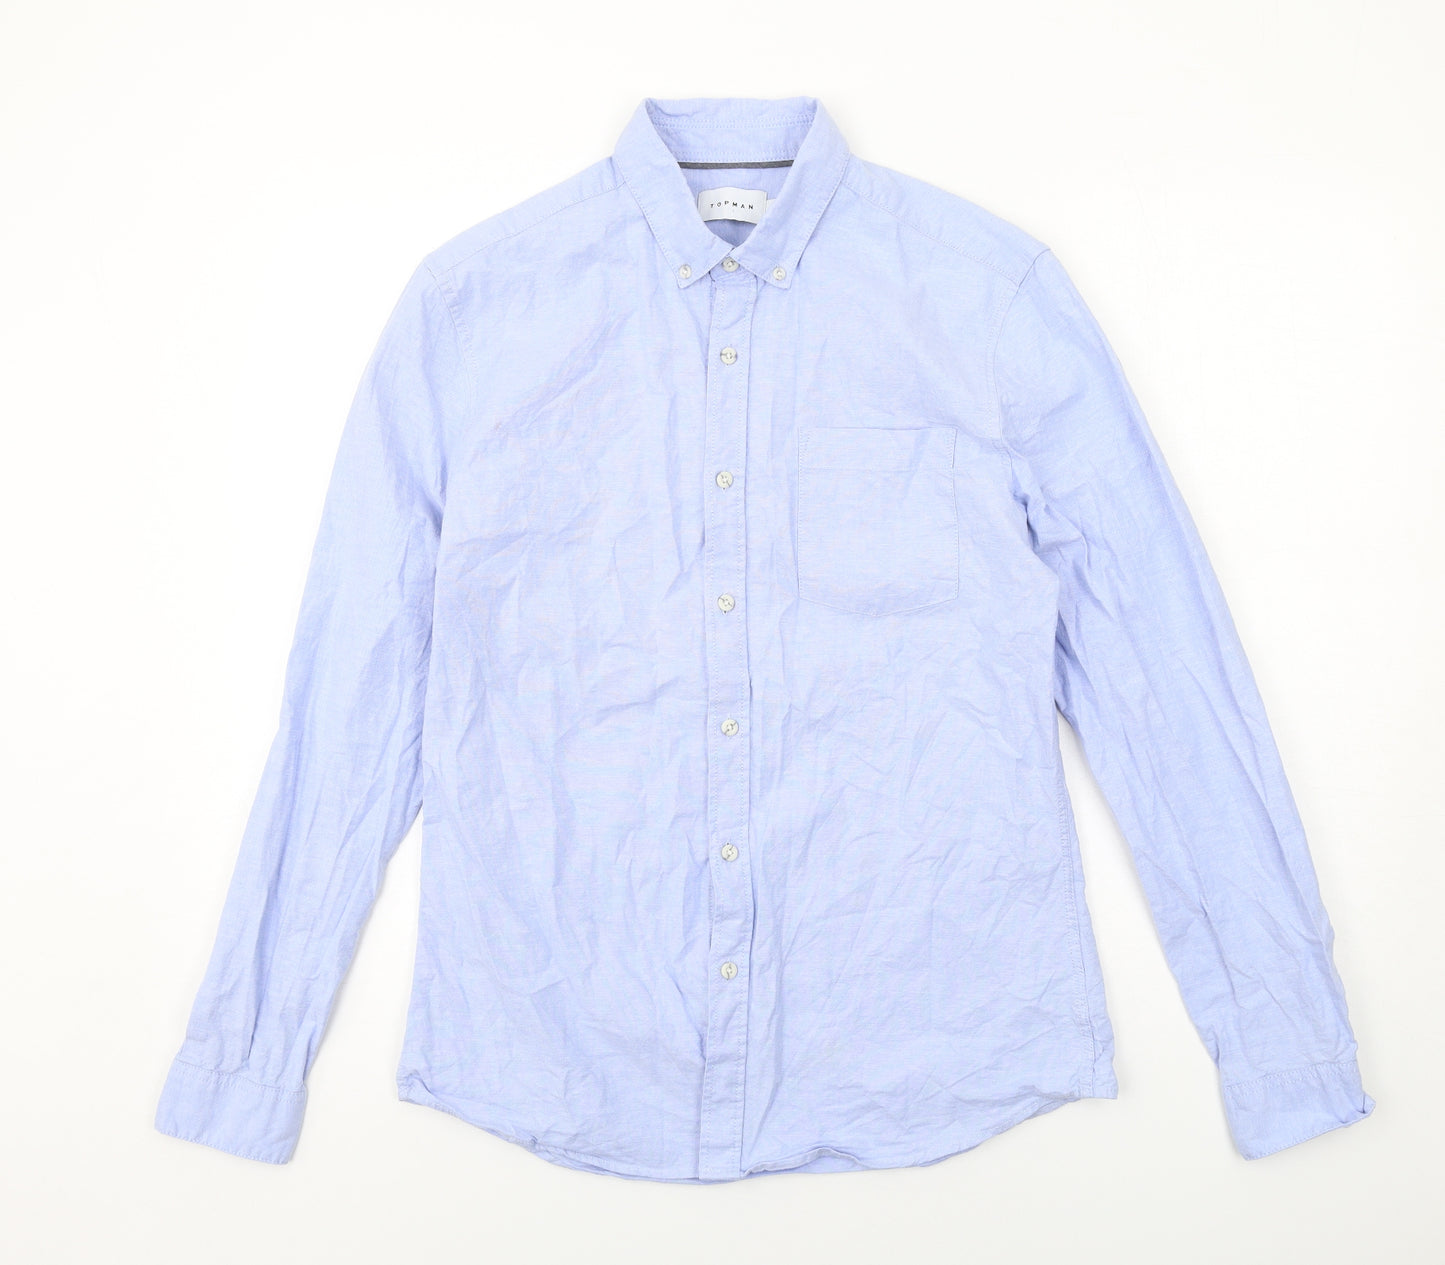 Topman Mens Blue Cotton Button-Up Size L Collared Button